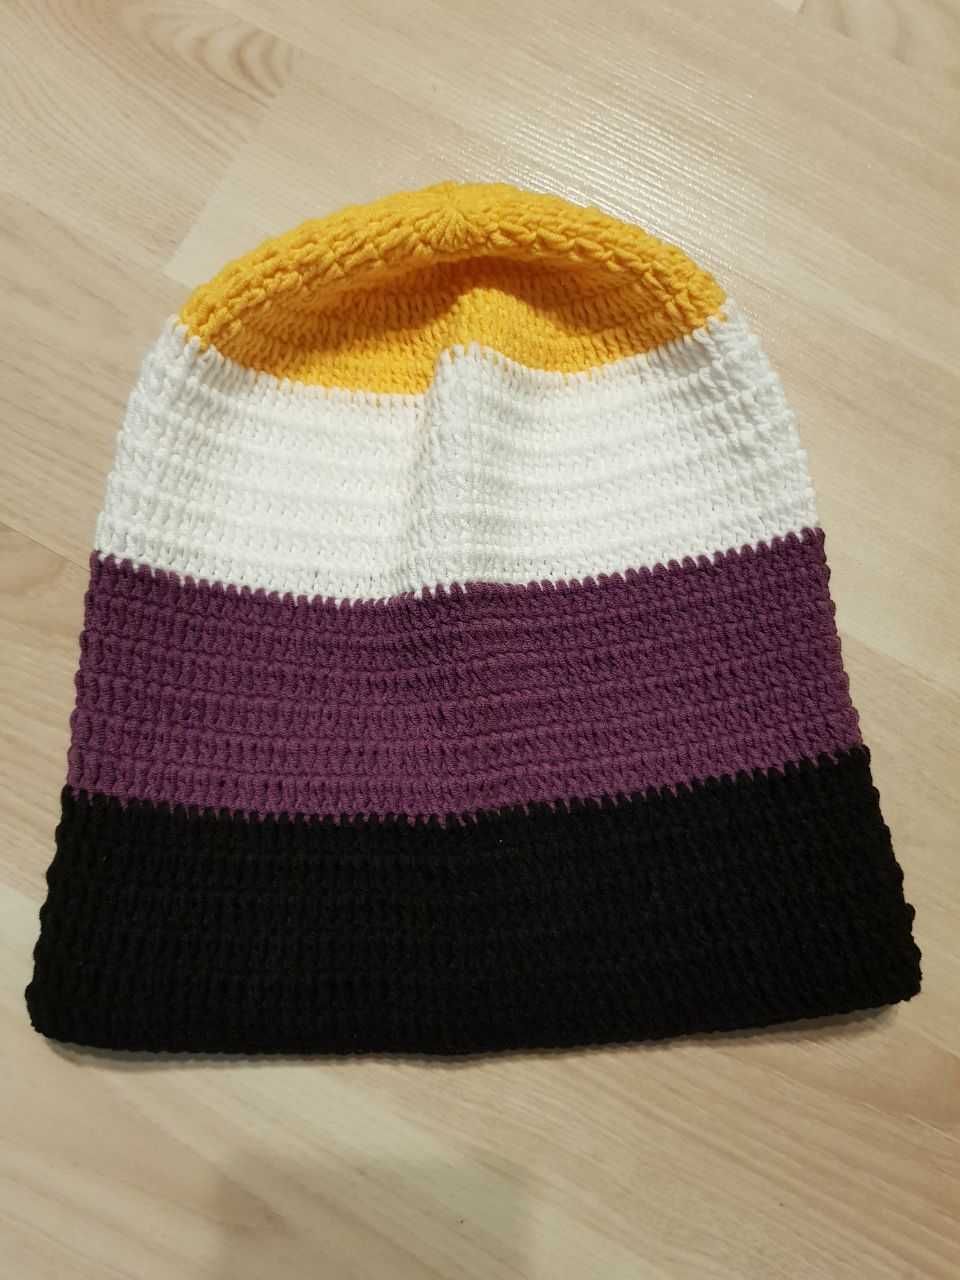 czapka LGBT+, non-binary hat.